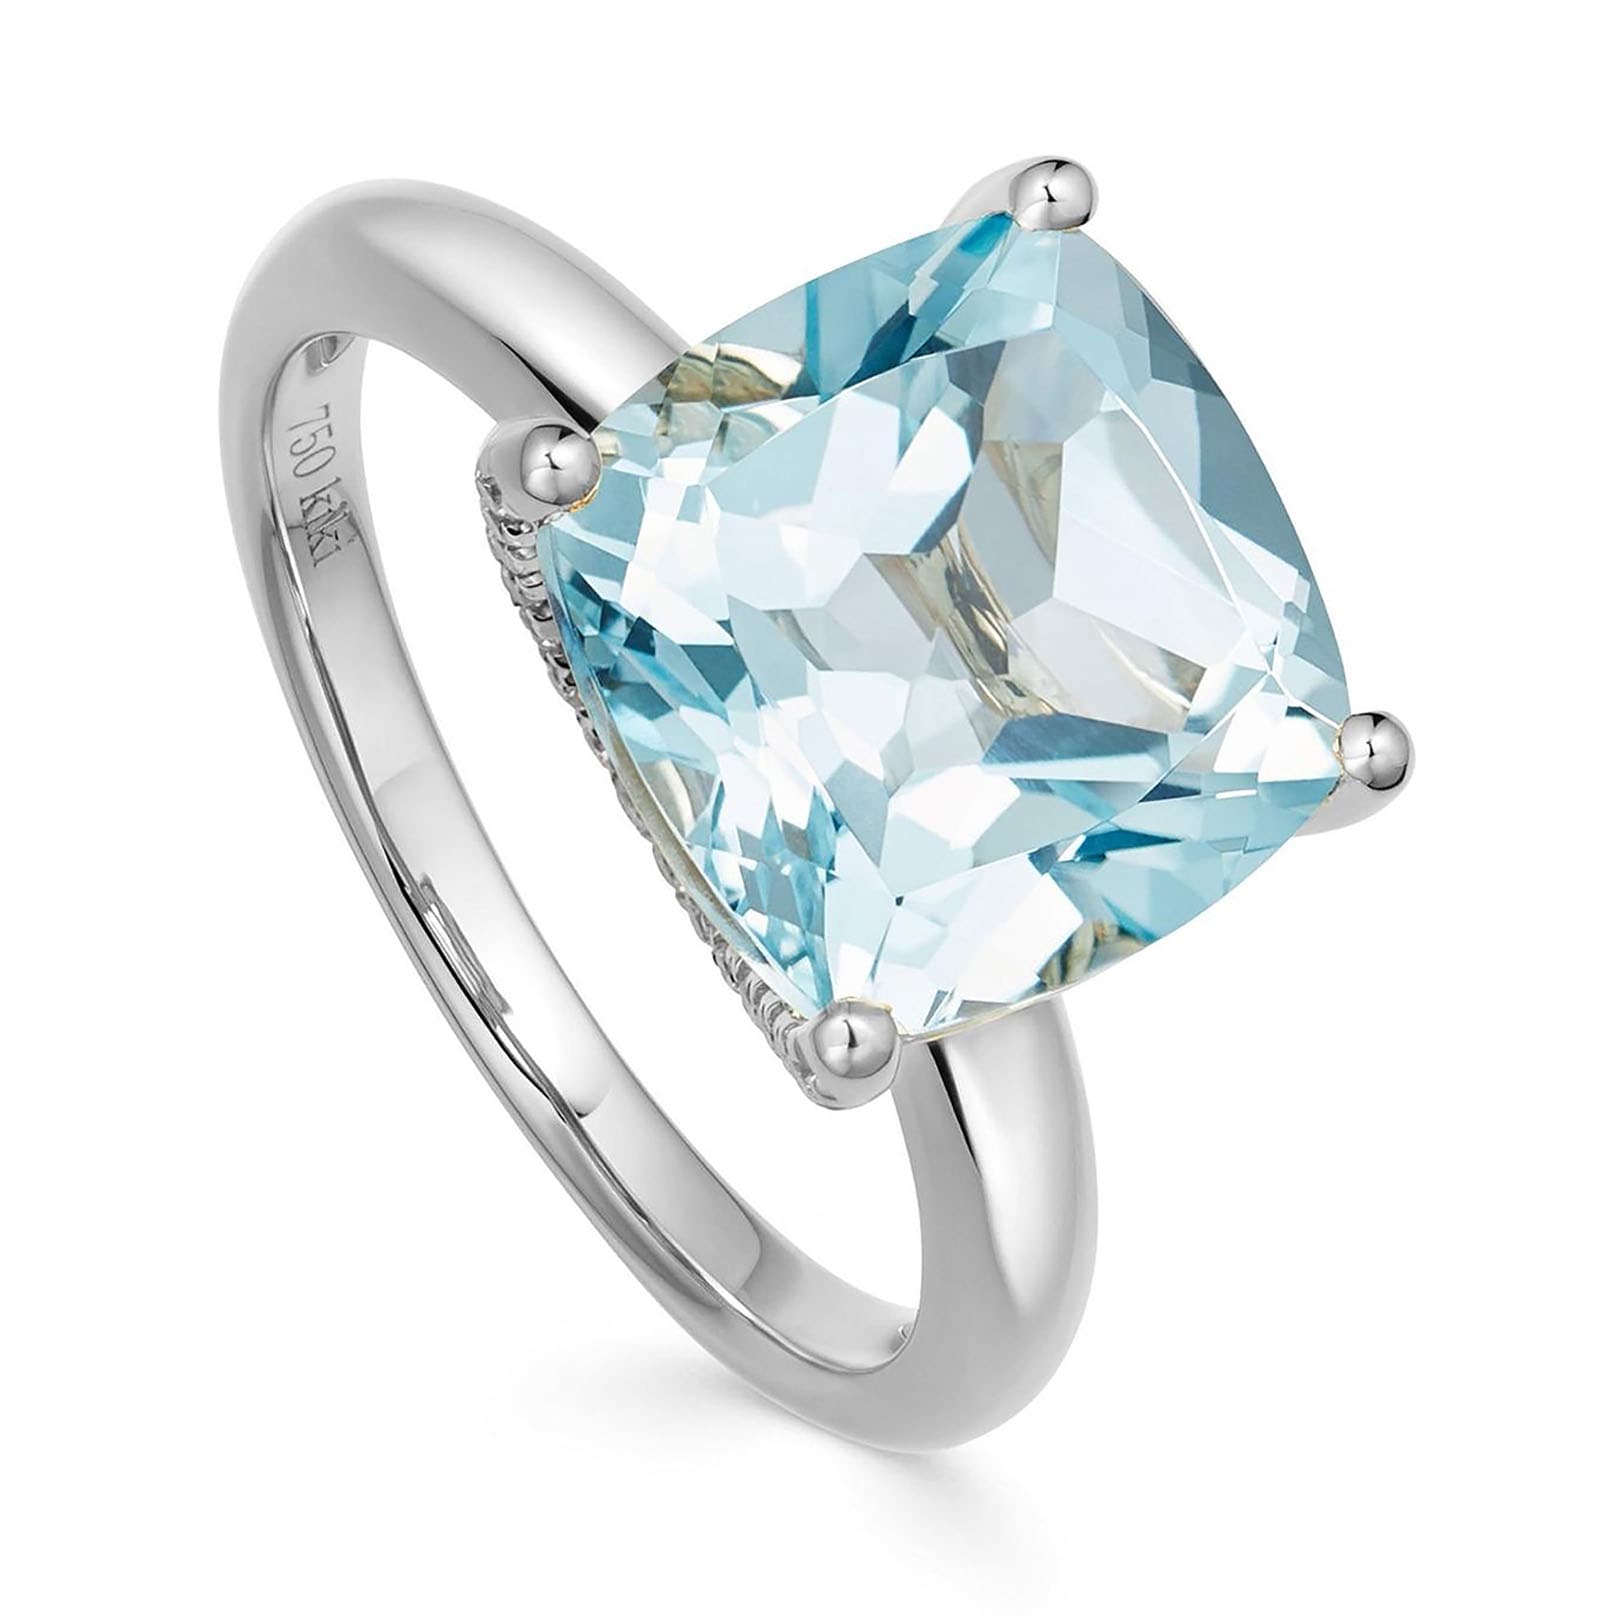 Kiki Cushion 18ct White Gold, Diamond Claw & Blue Topaz Ring - Ring Size O